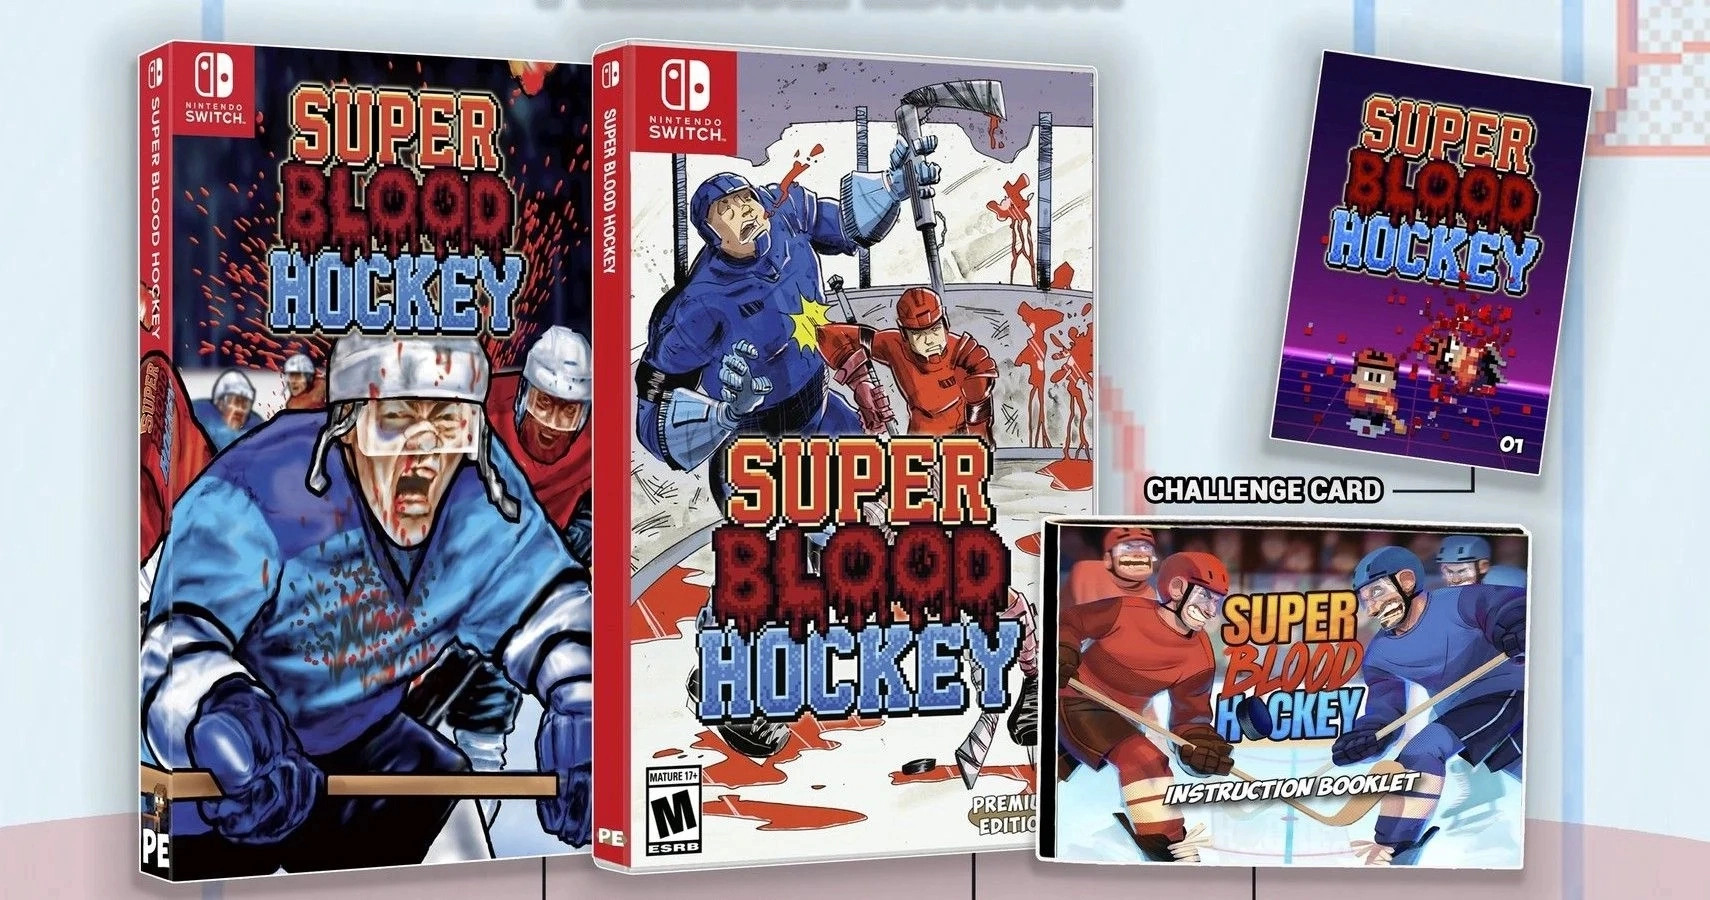 Super Blood Hockey - Premium Edition